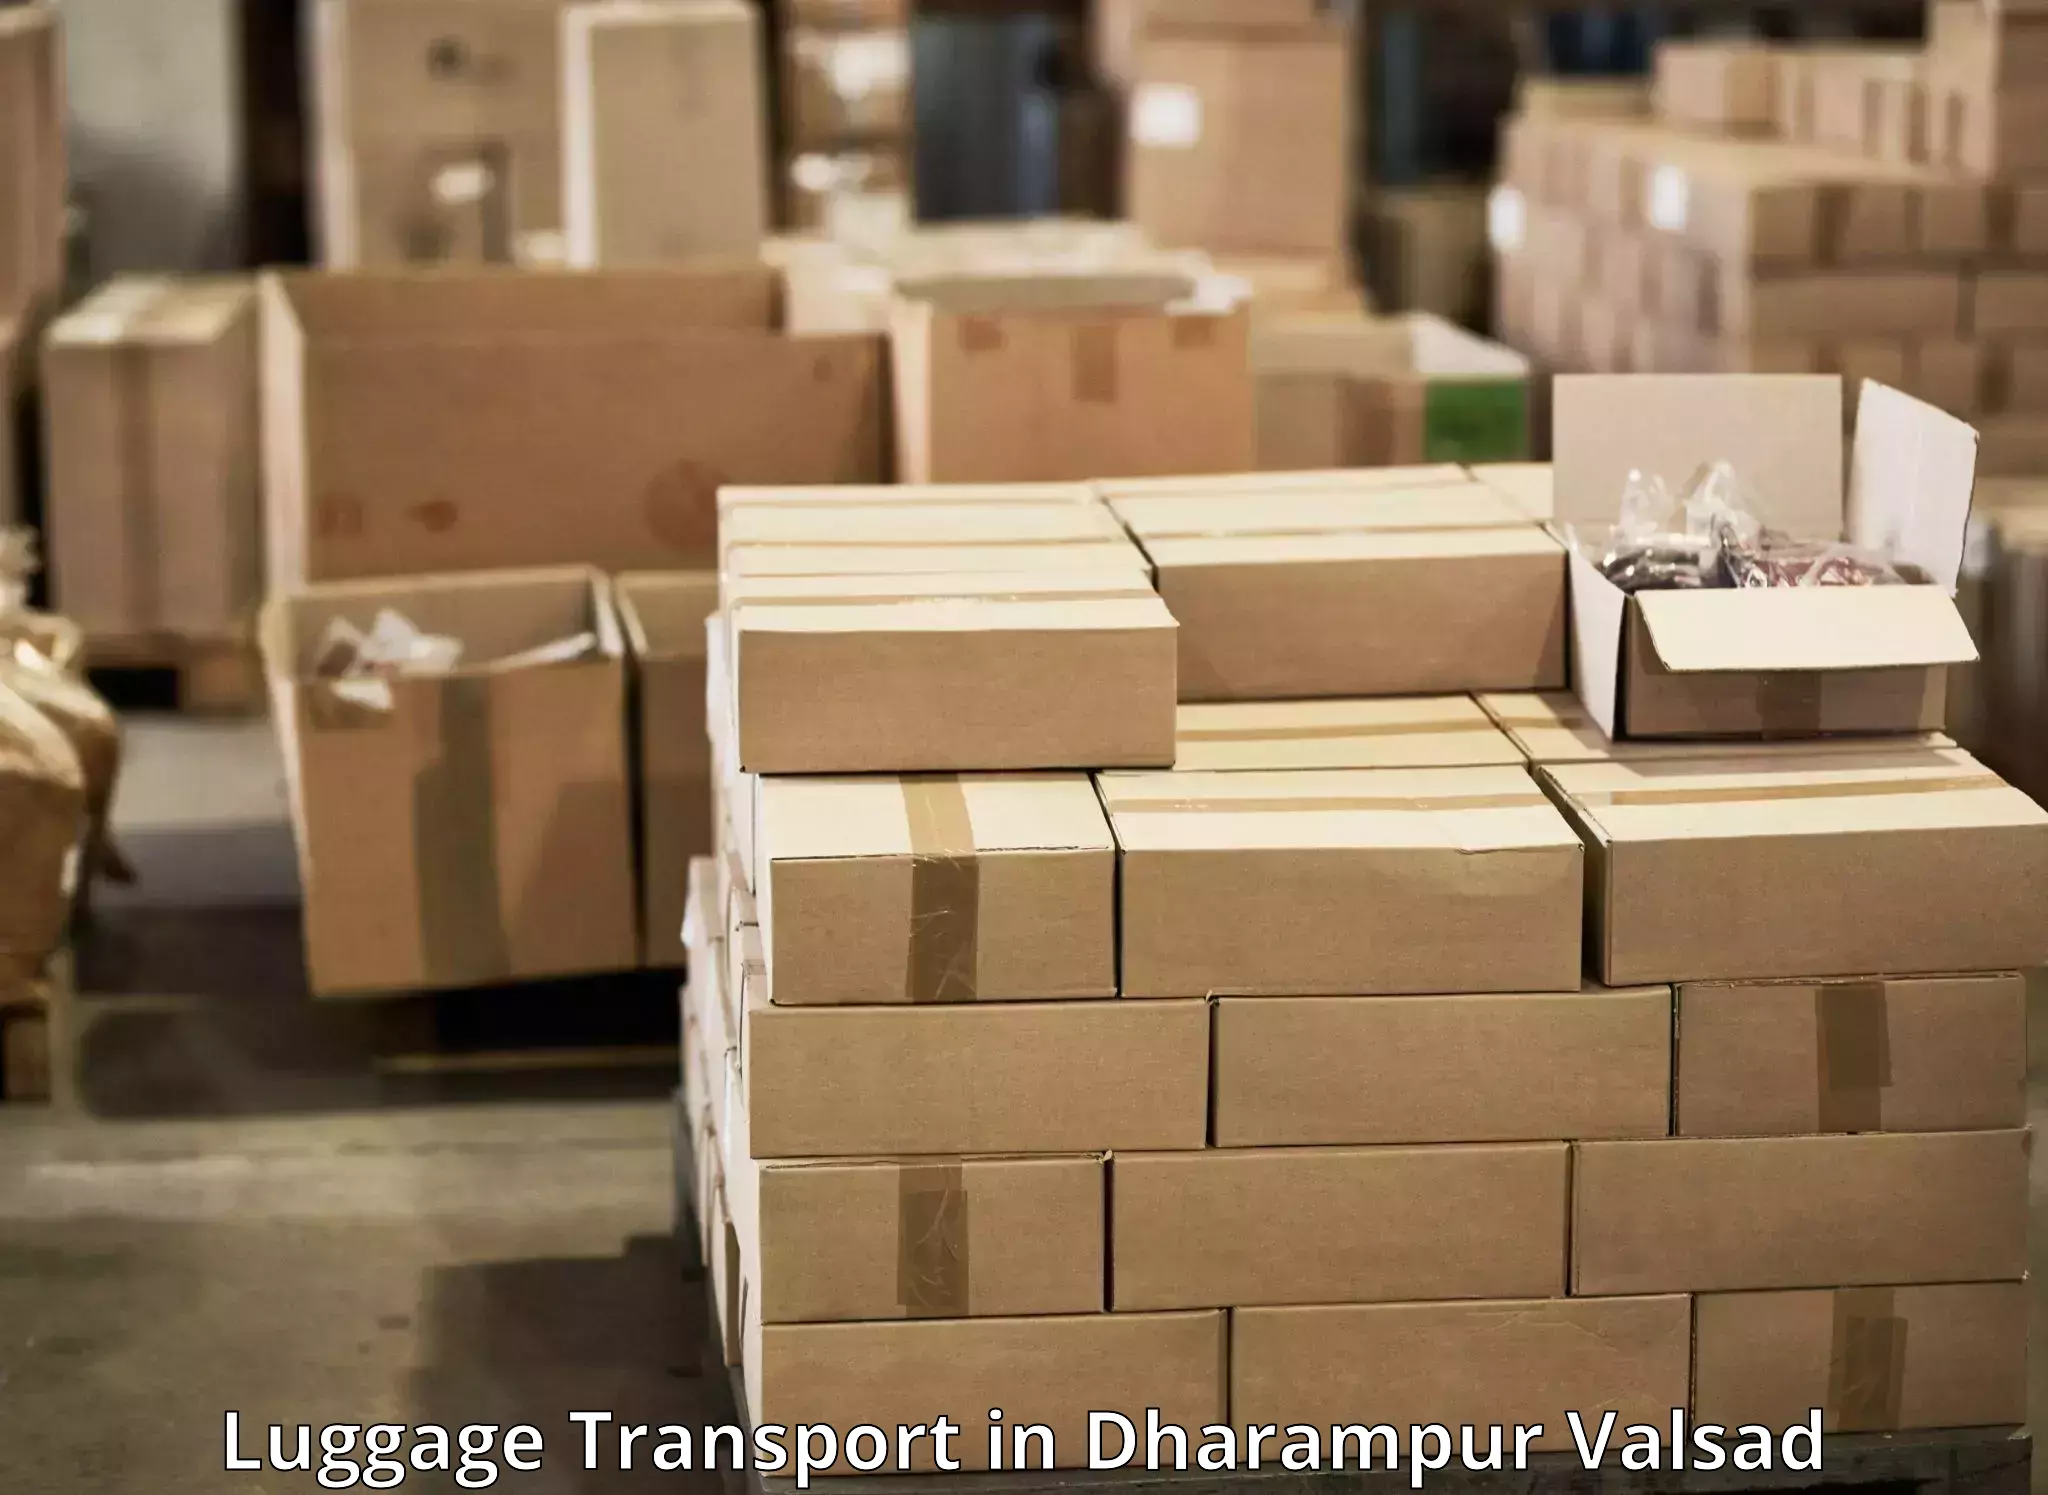 Unaccompanied luggage service in Dharampur Valsad